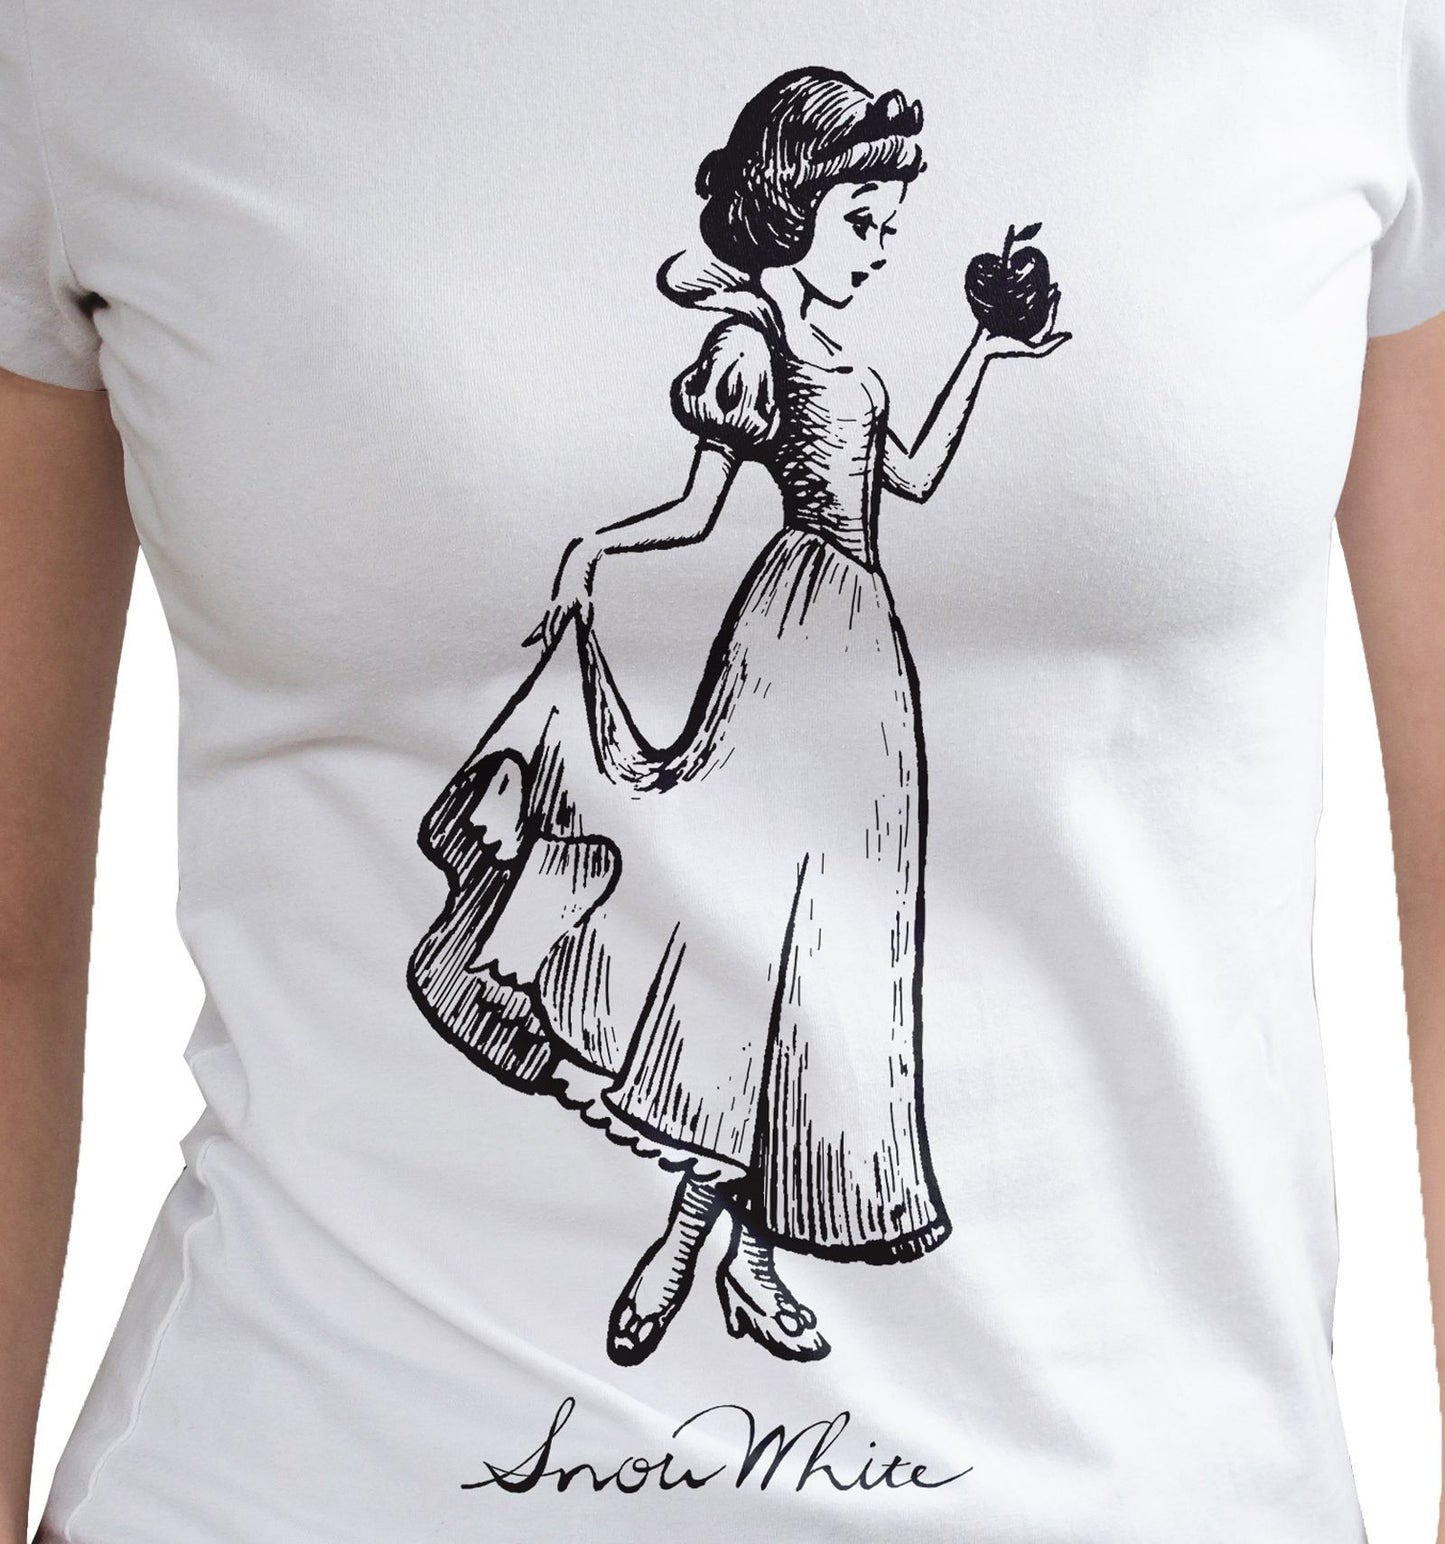 T-shirt Femme Blanche-Neige Disney Princesses - Drawing Engraving